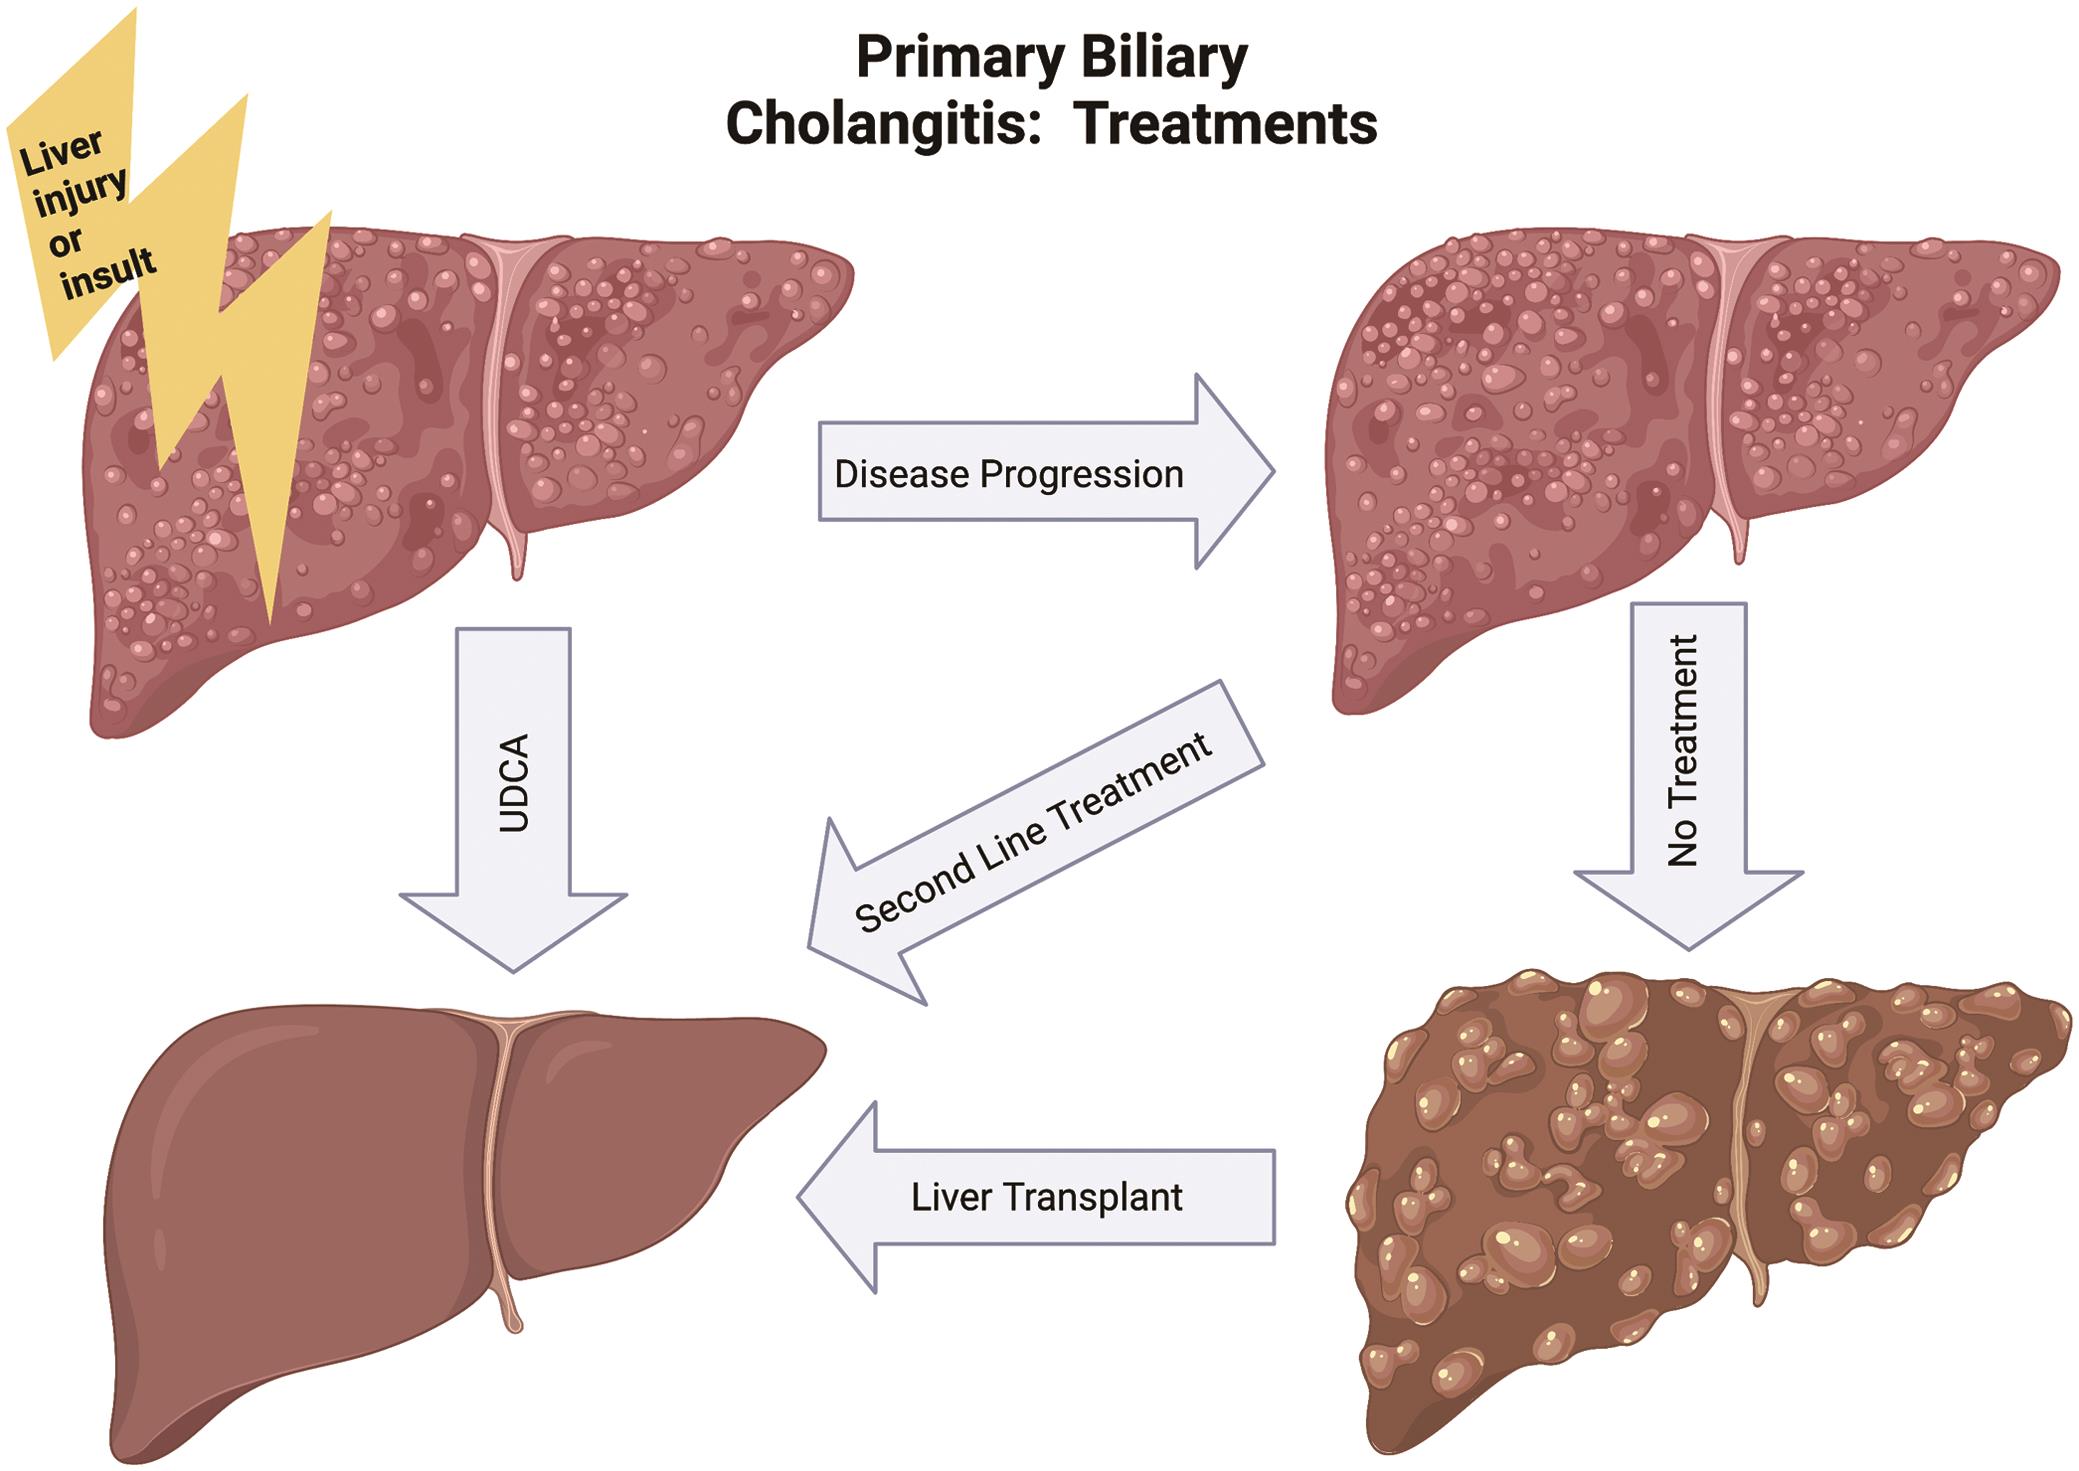 Treatment of primary biliary cholangitis.